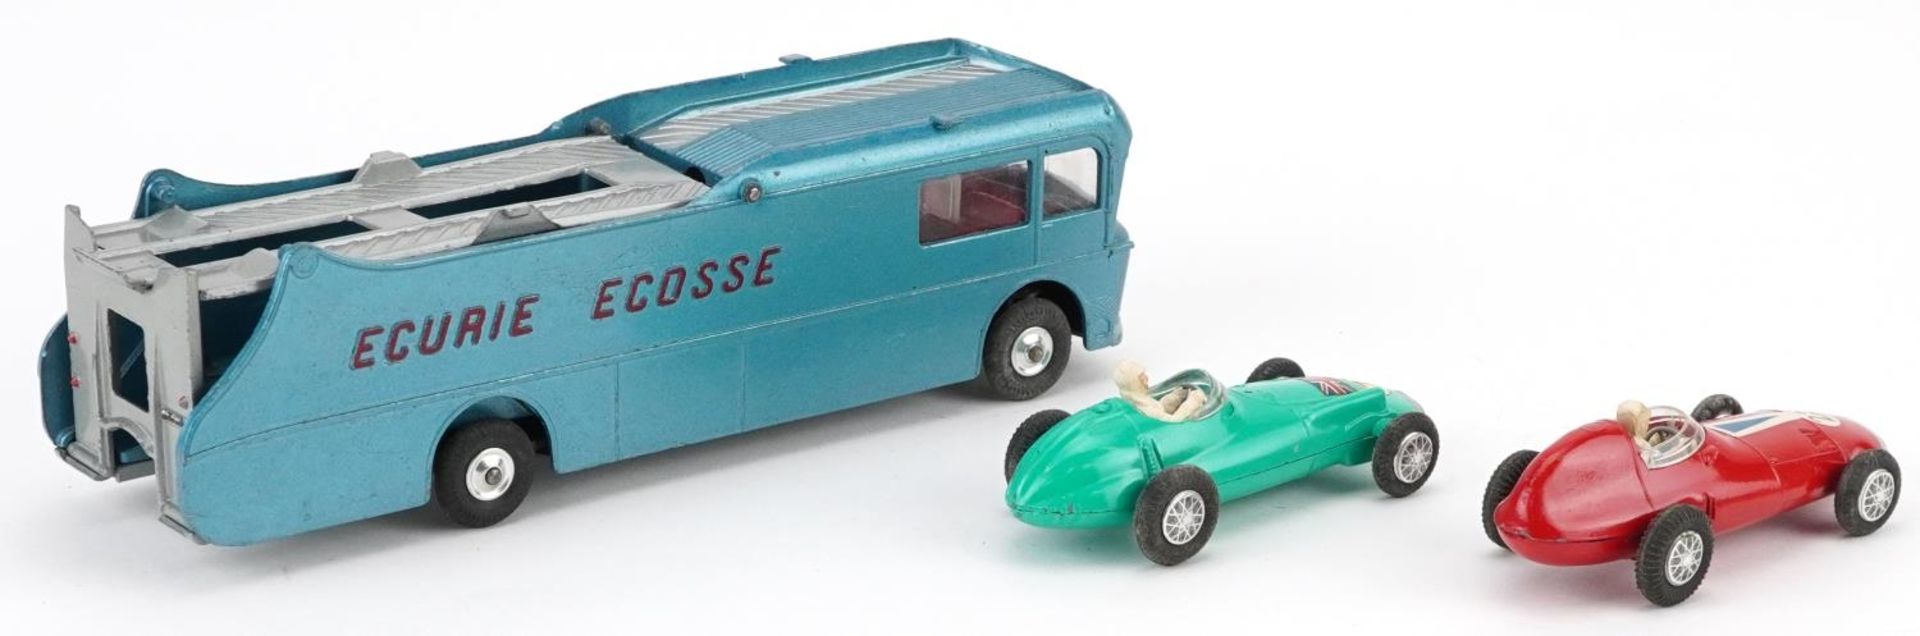 Vintage Corgi Major diecast Ecurie Ecosse racing car transporter with racing cars, gift set no 16 - Bild 3 aus 6